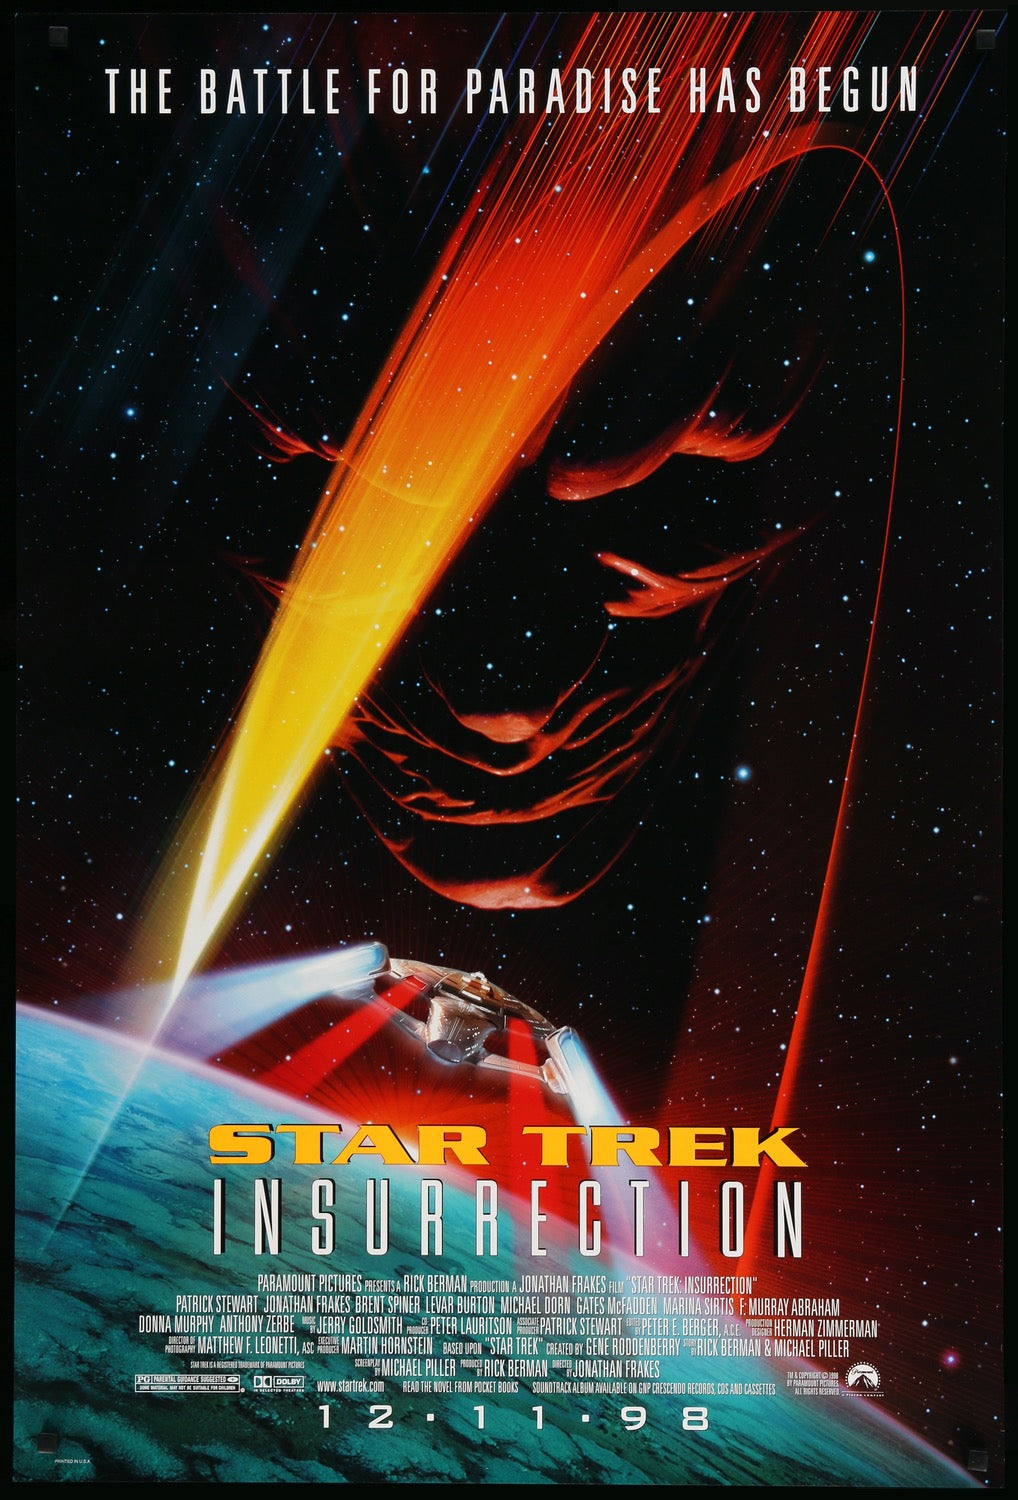 Star Trek: Insurrection (1998) original movie poster for sale at Original Film Art